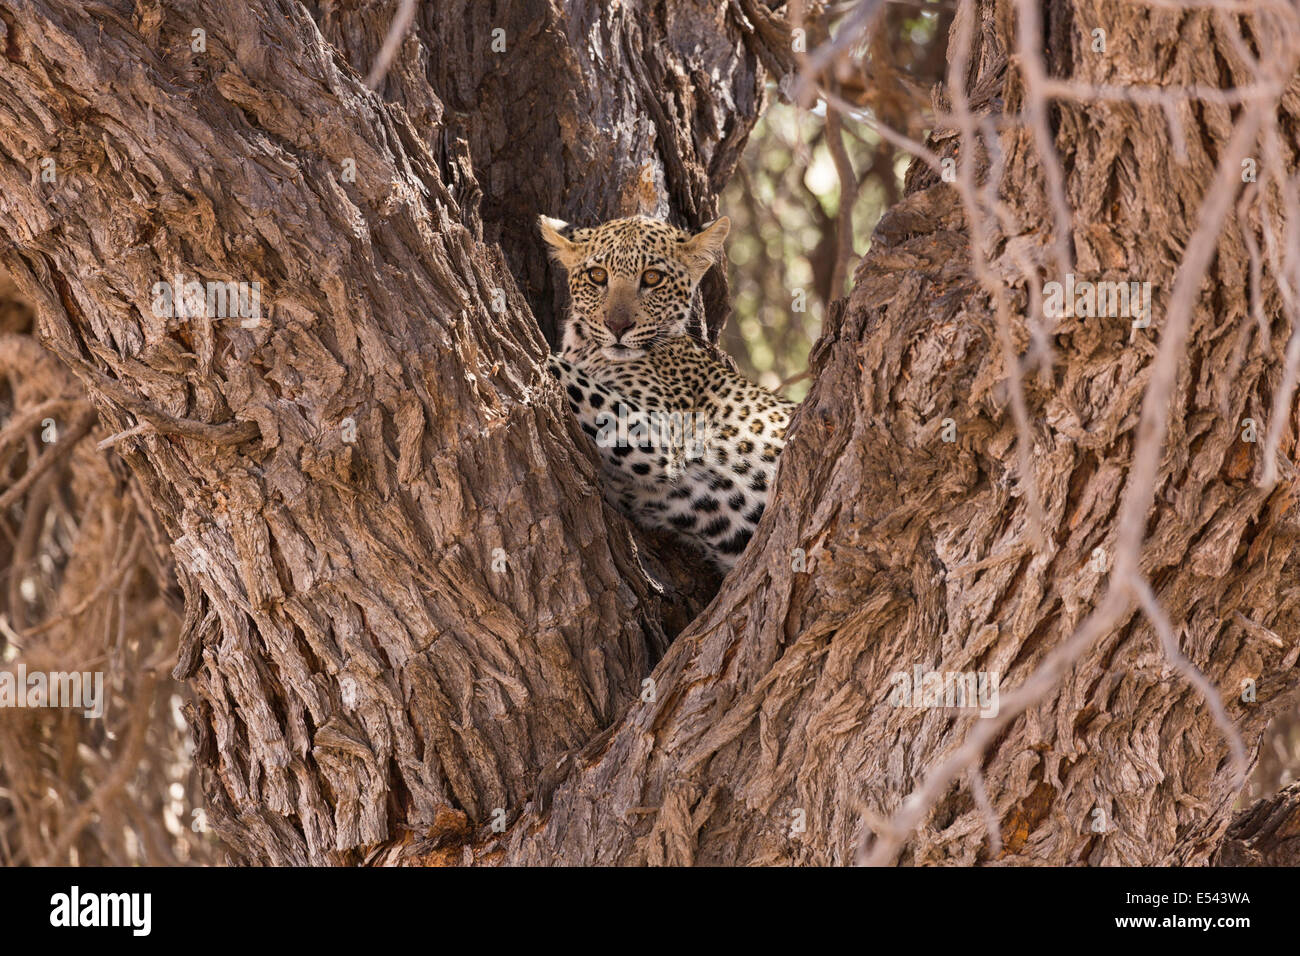 Baby Leopard Kgalagadi Tranfrontier Park South Africa Foto de stock